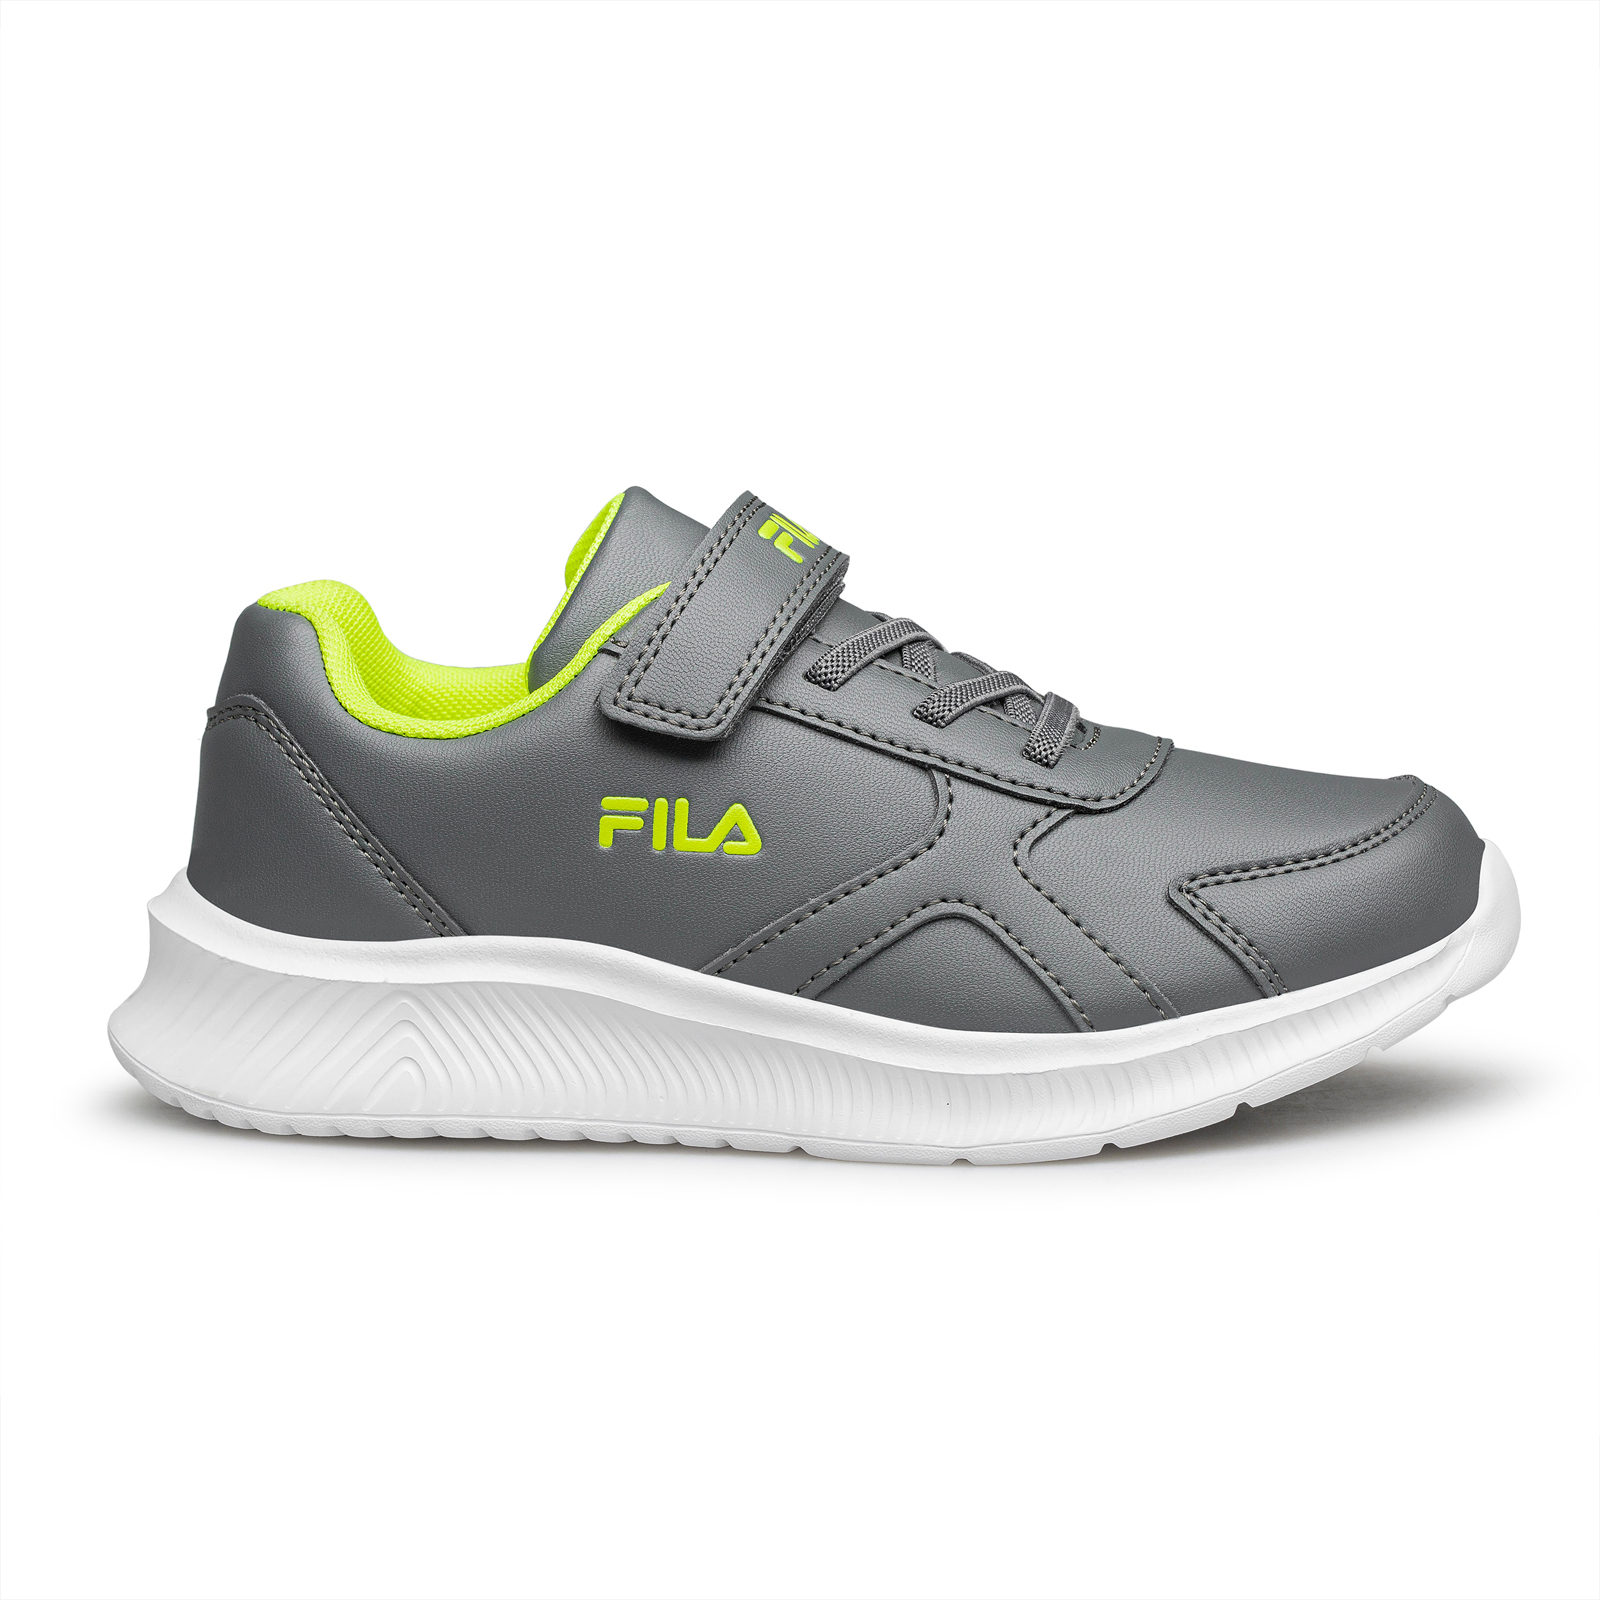 Fila - BRETT 4 V FOOTWEAR - ANTHRACITE FREEZE GREEN Παιδικά > Παπούτσια > Αθλητικά > Παπούτσι Low Cut